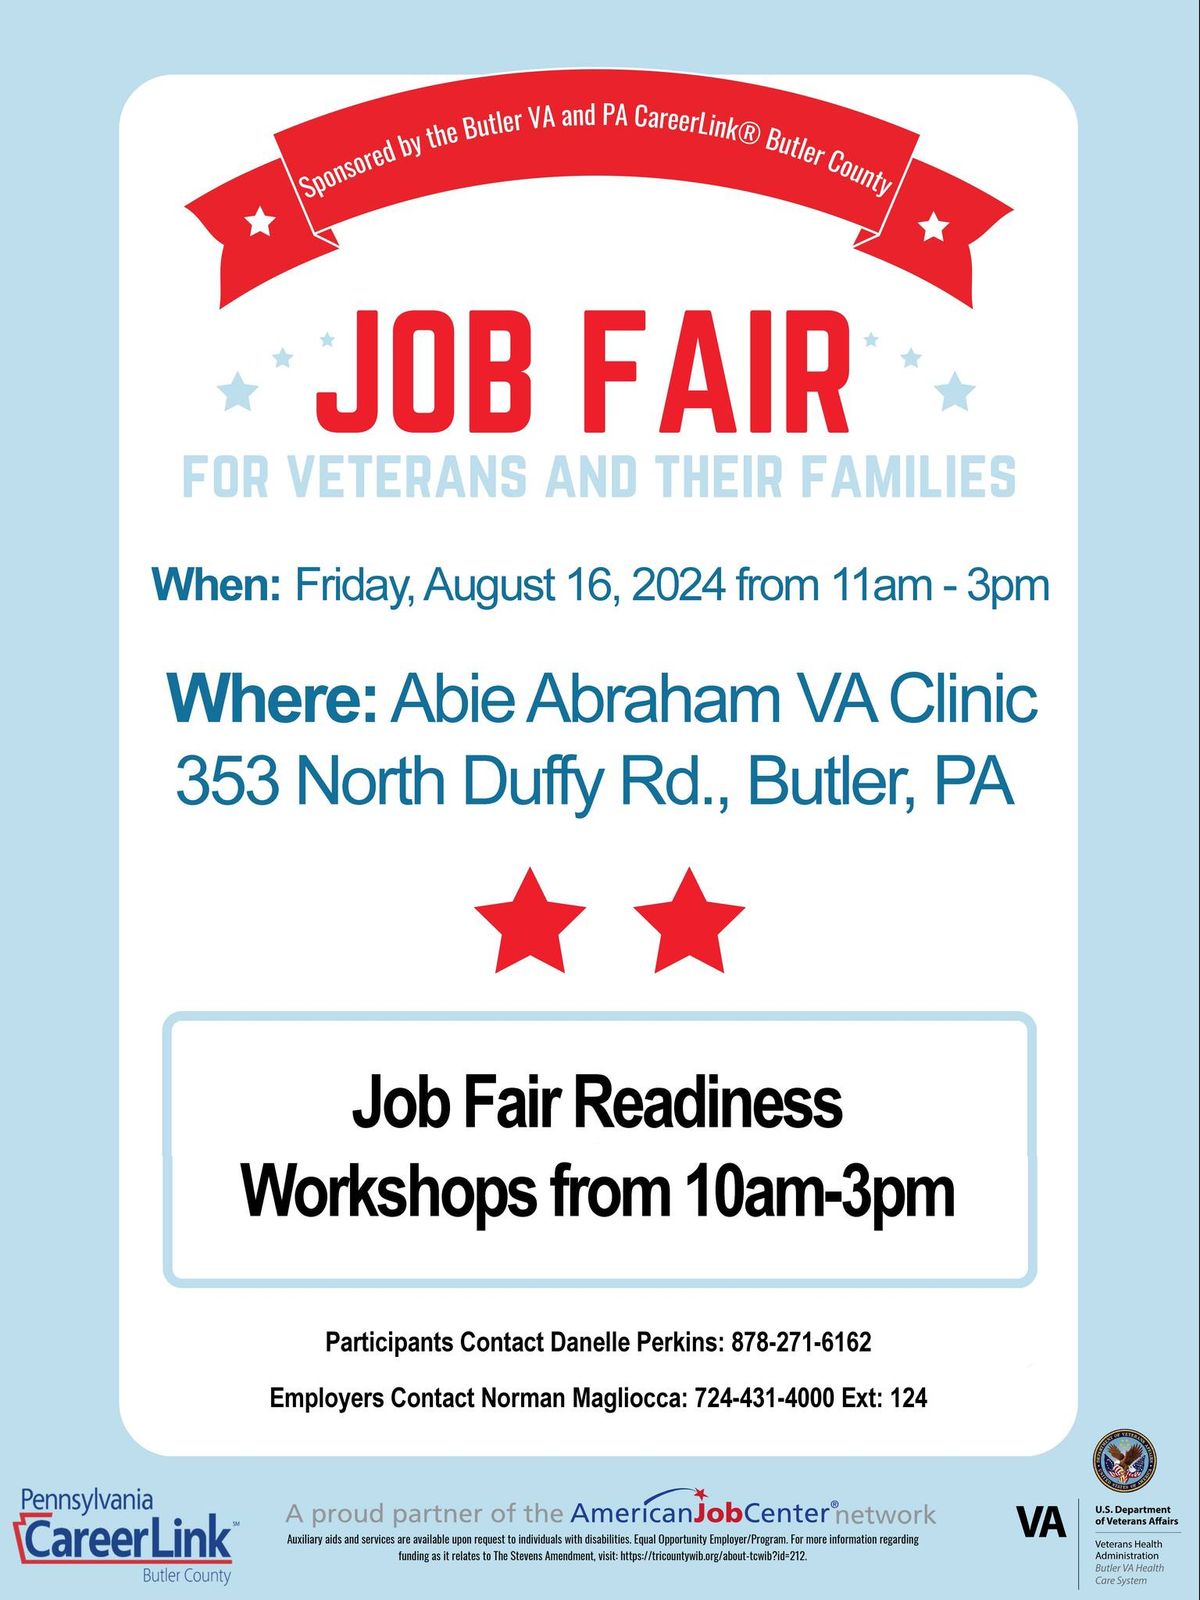 Job Fair for Veterans and their families